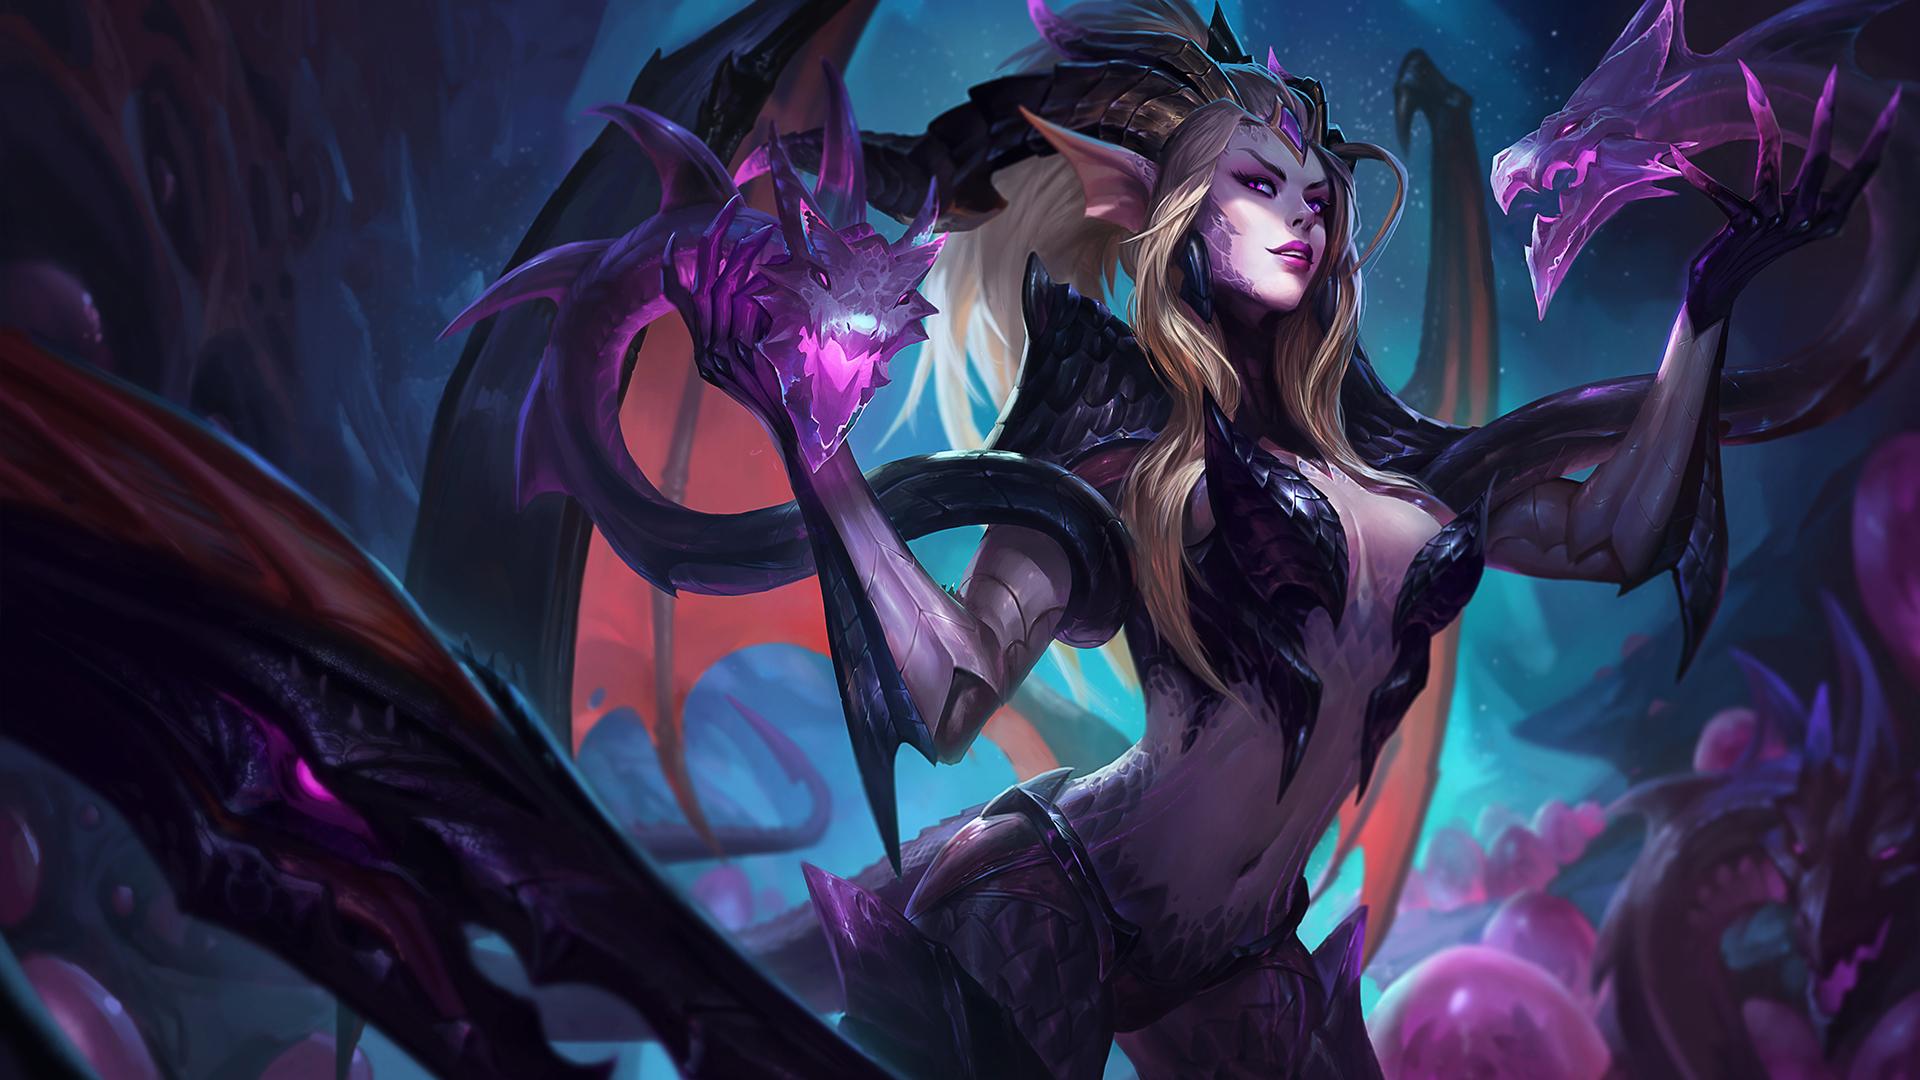 Dragon Sorceress Zyra splash art for League of Legends